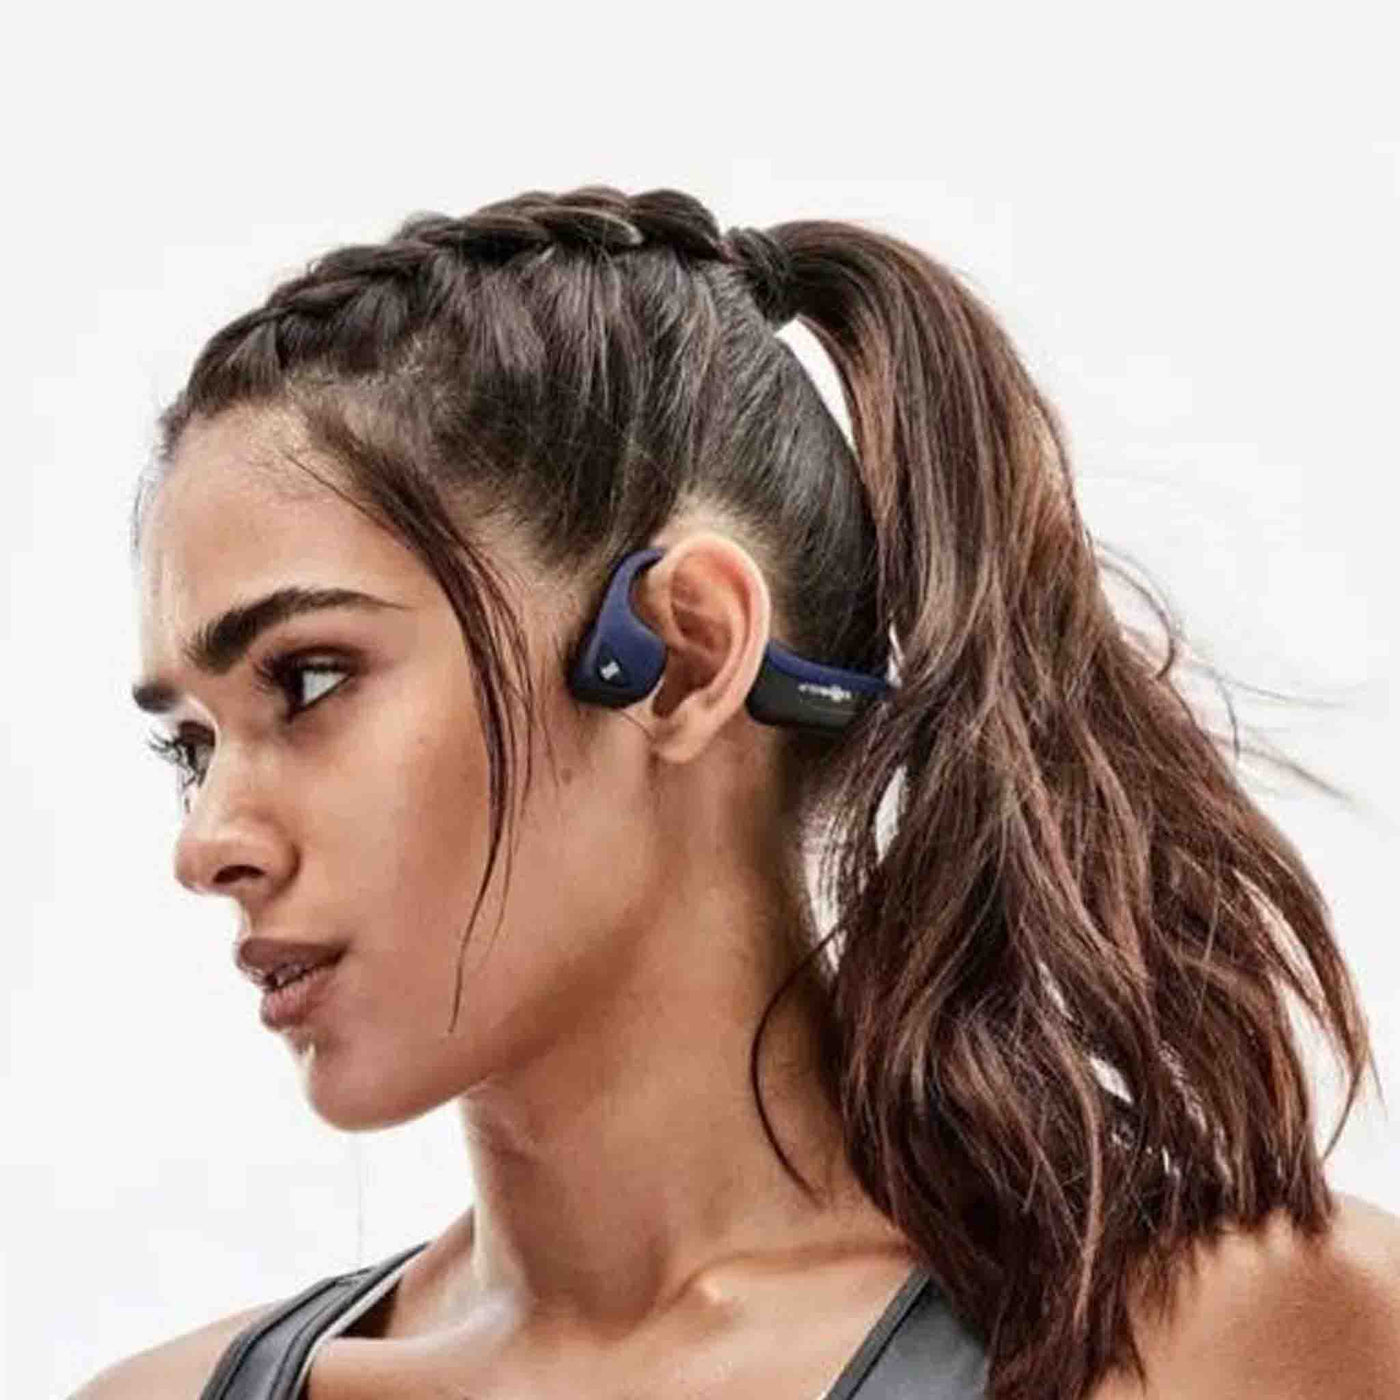 Cycling headphones Aftershokz wireless bluetooth BT comfortable legal